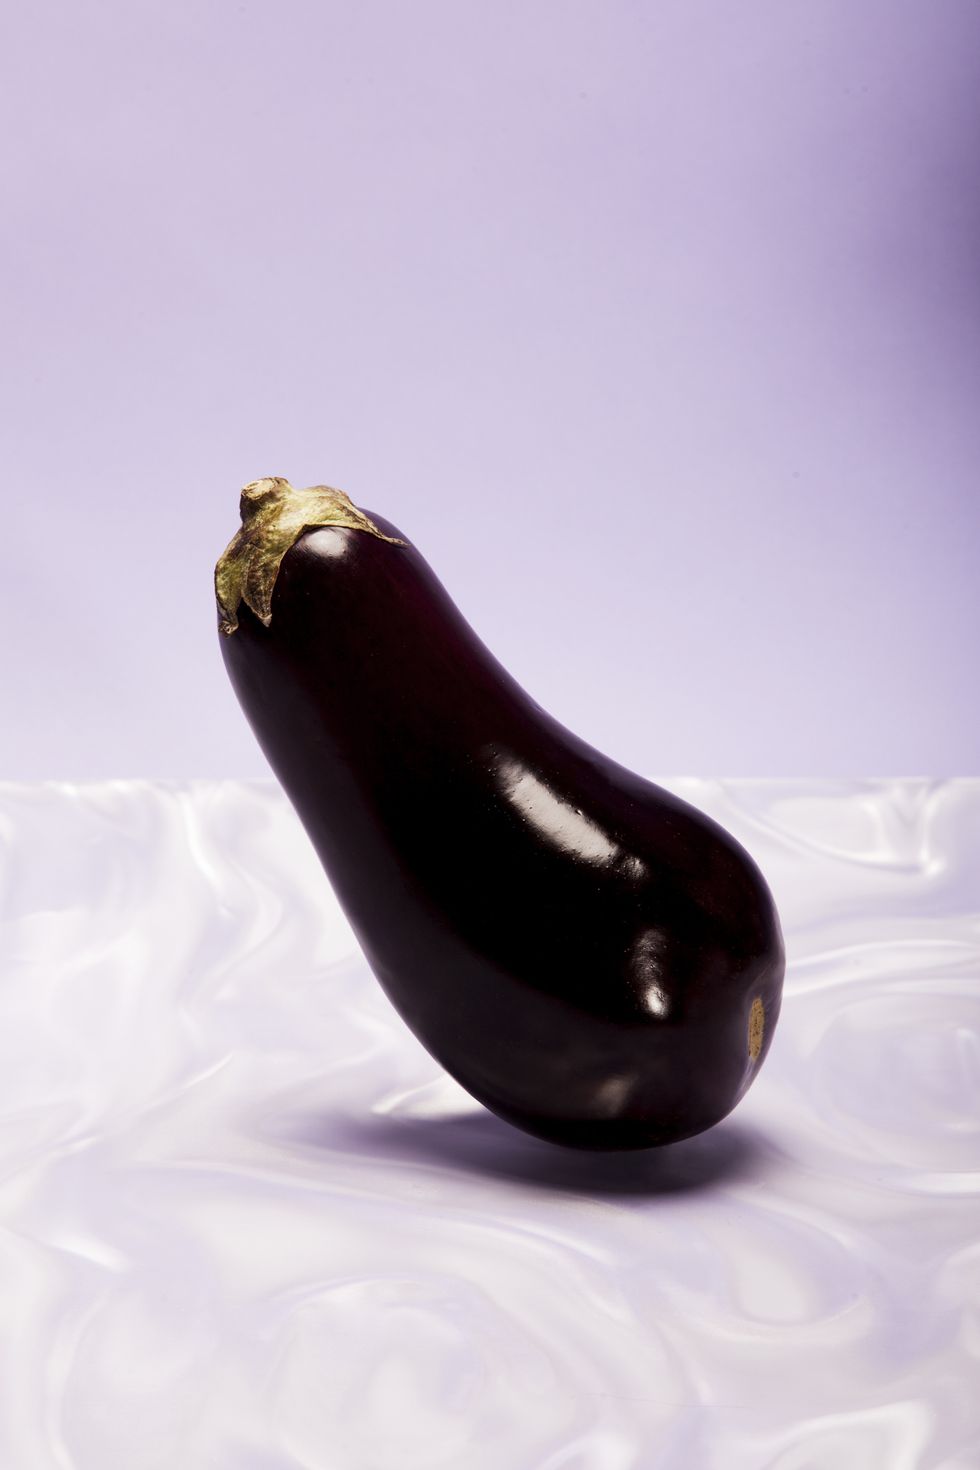 eggplant symbolising penis